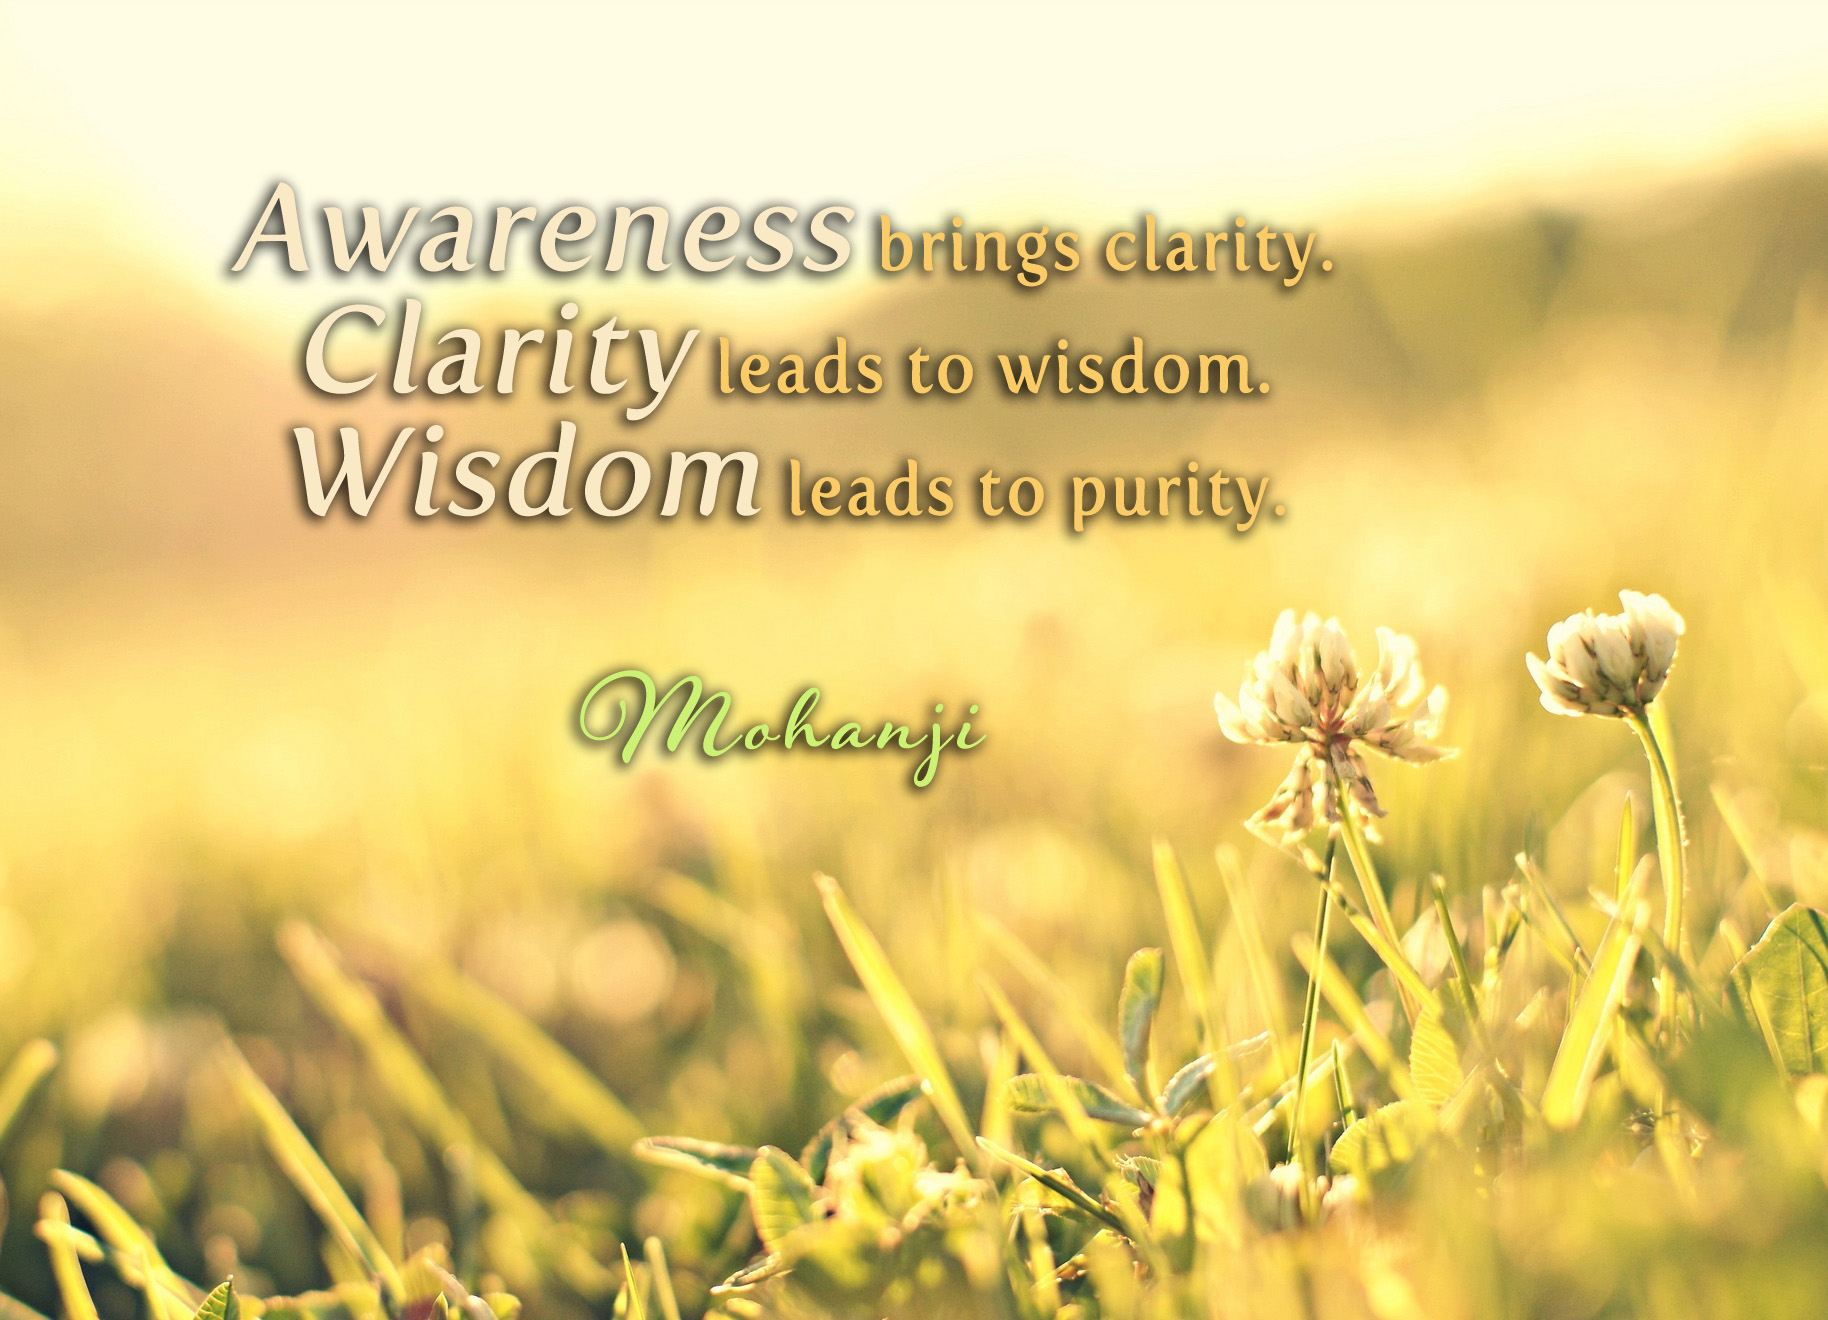 Awareness brings Clarity. Clarity leads to wisdom. Wisdom leads to purity. Mohanji